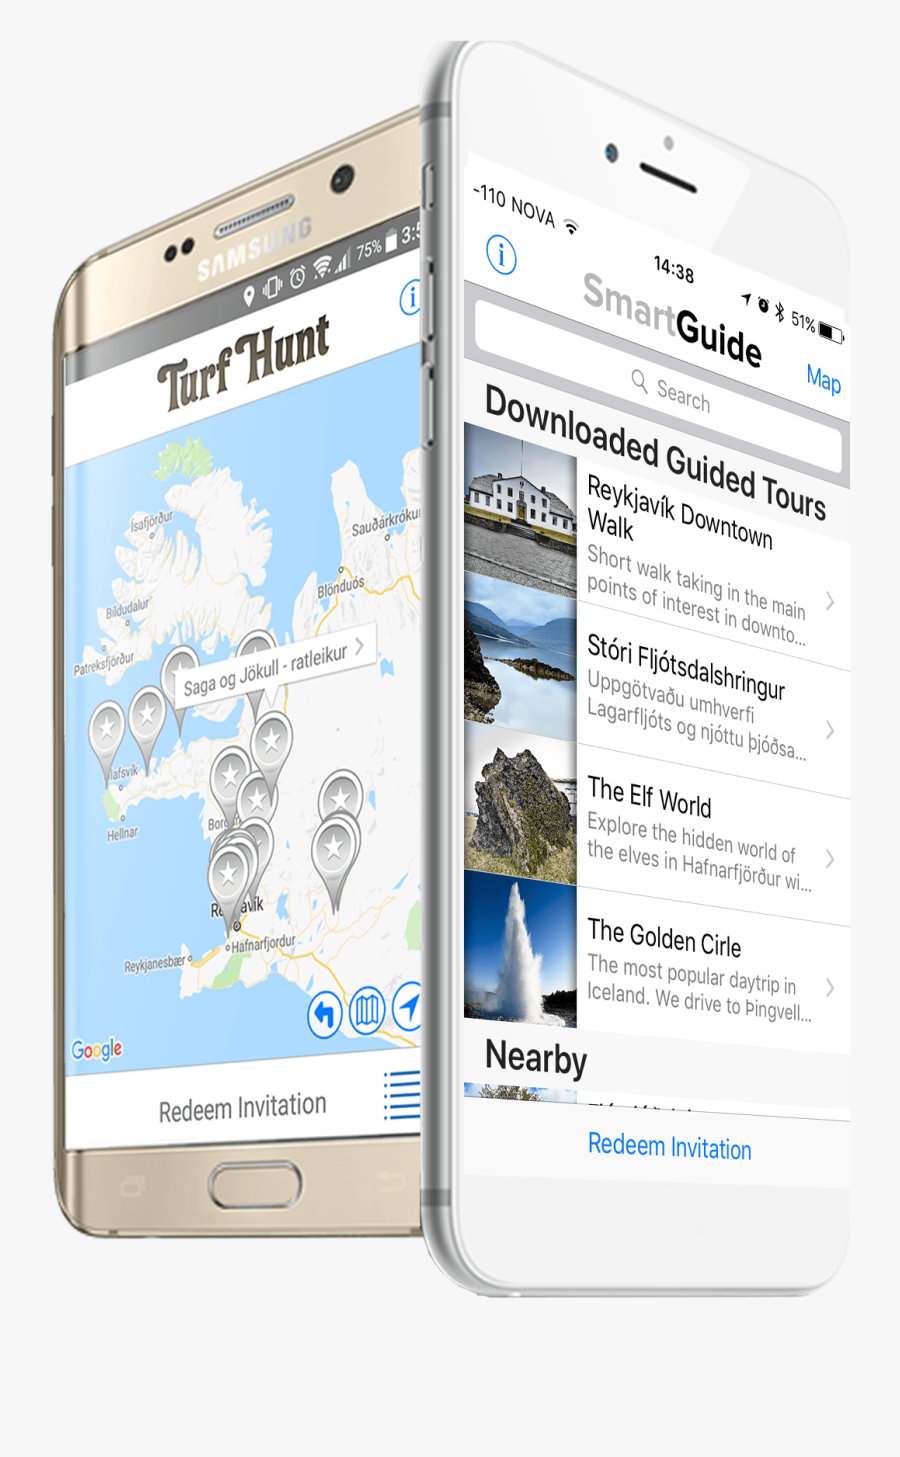 Locatify Smartguide Tour Guide App - Turf Hunt, Transparent Clipart